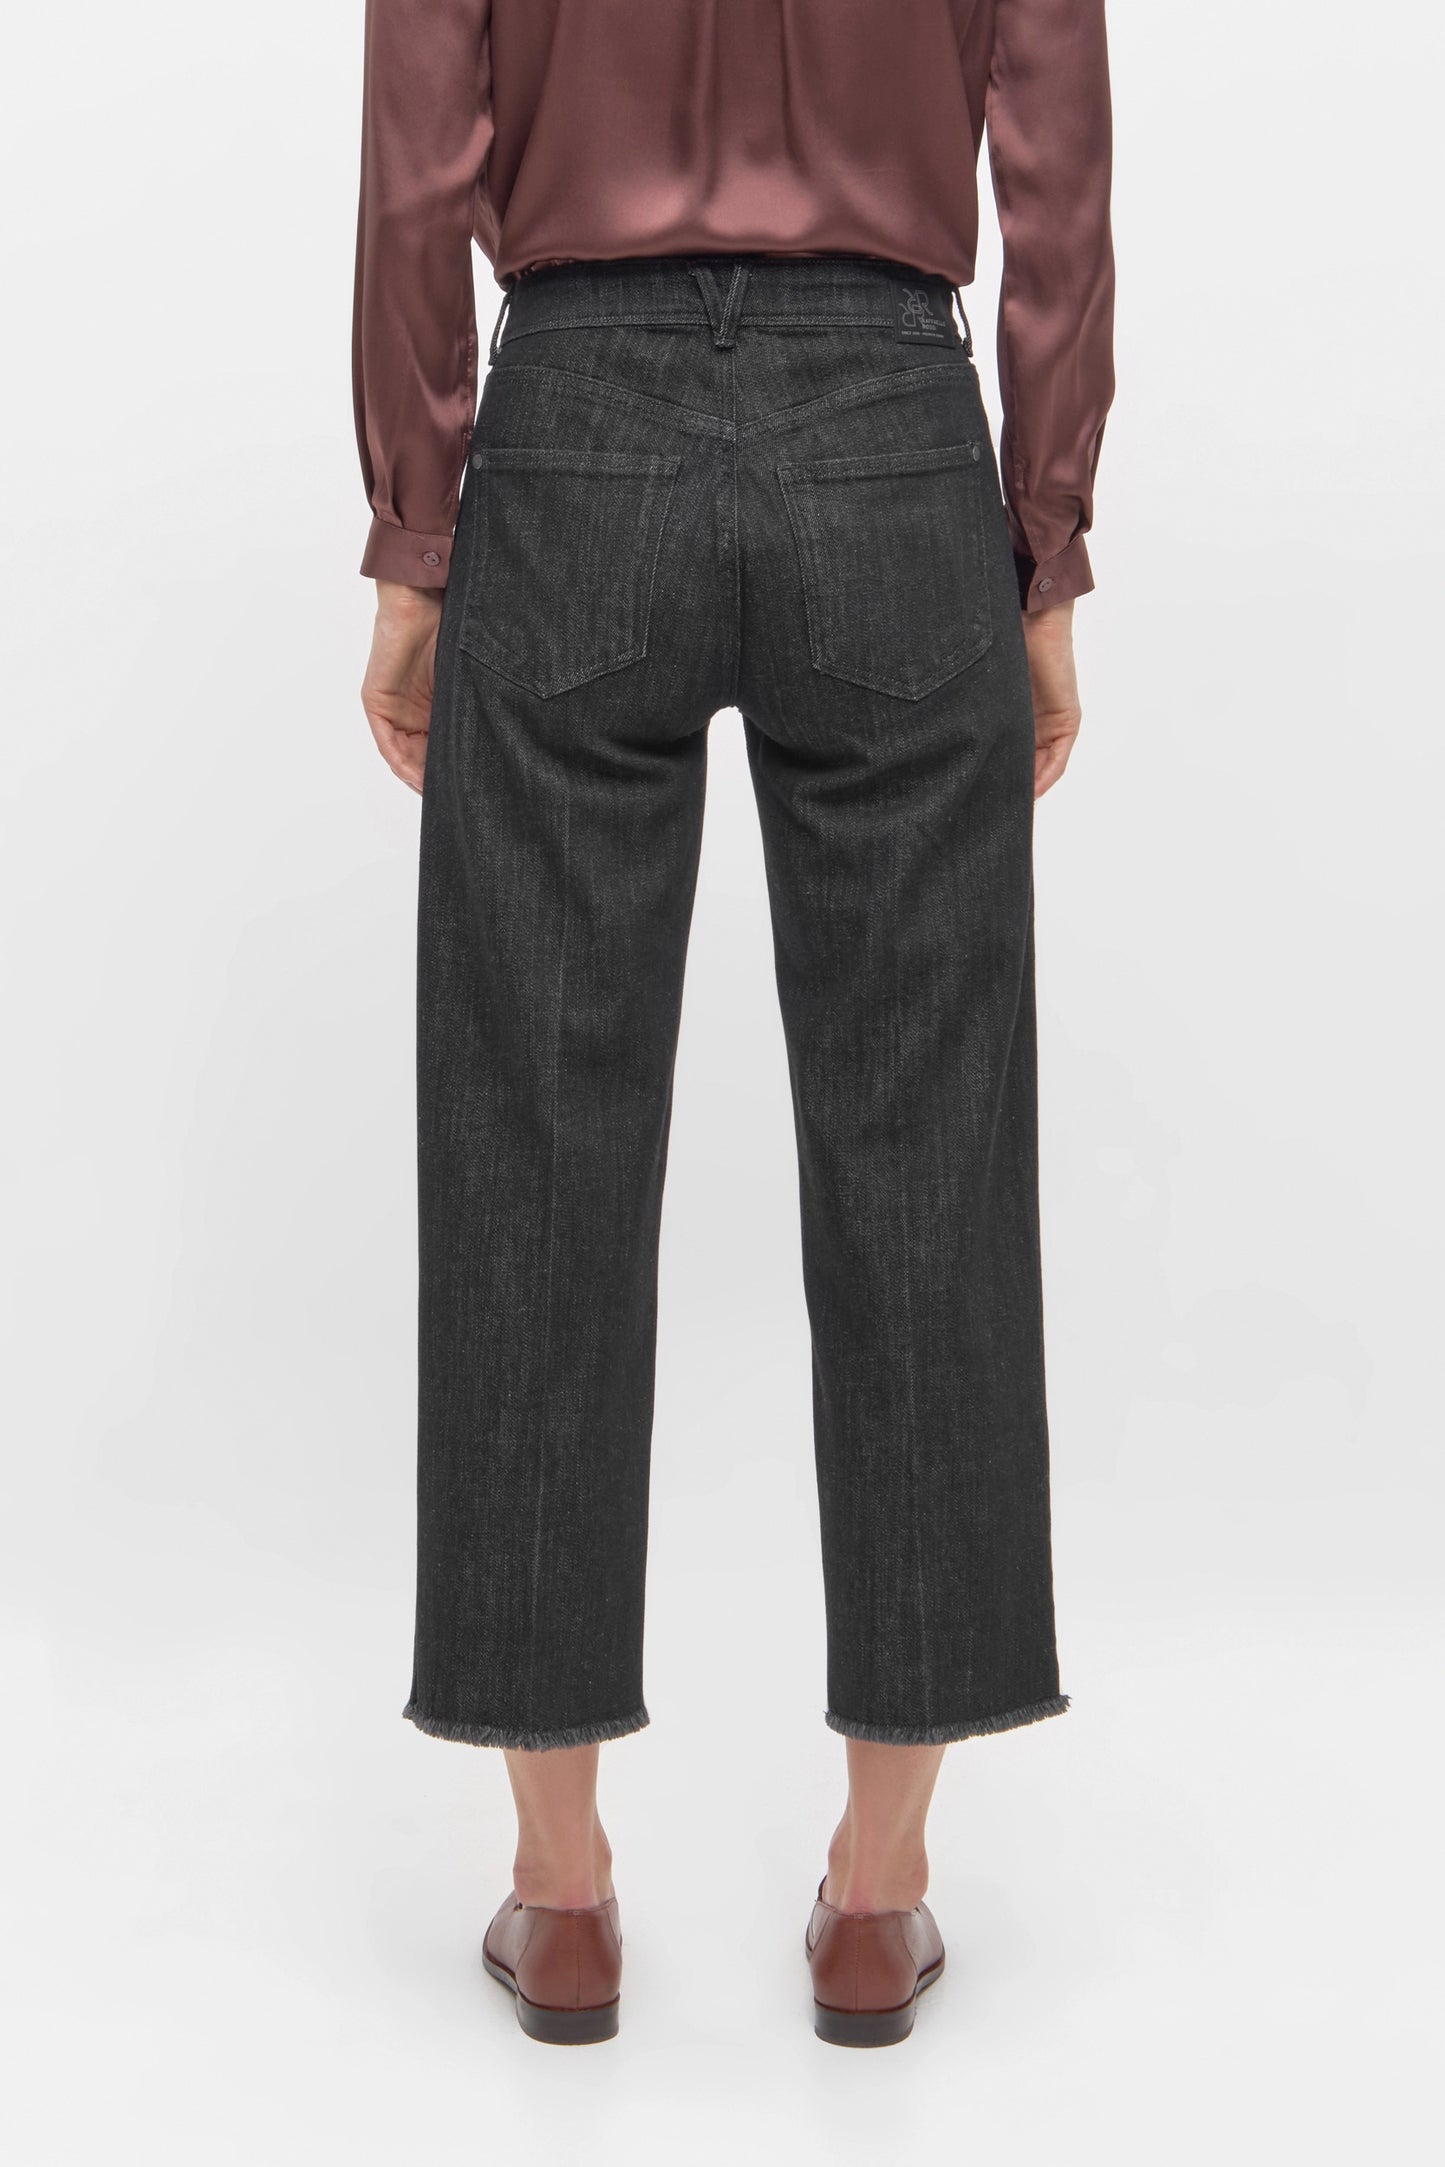 Raffaello Rossi - Kira 6/8 - 5 Pocket Straight Jean